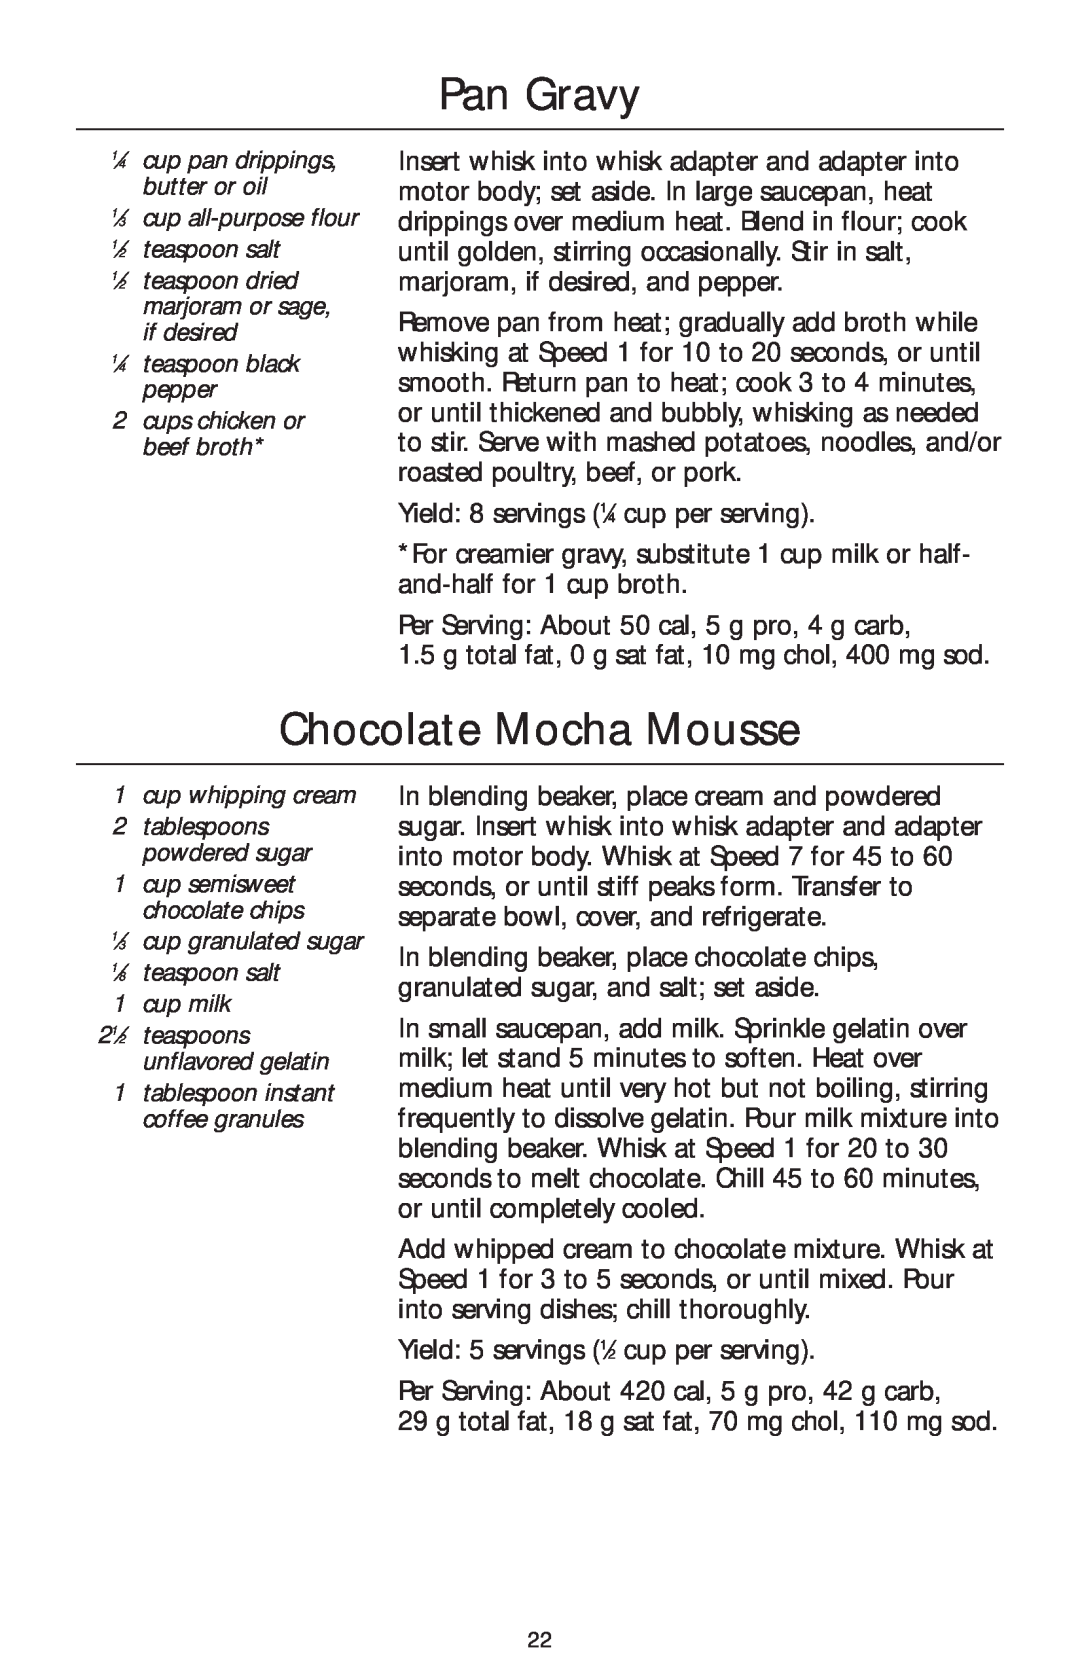 KitchenAid KHB100, KHB200, KHB300 manual Pan Gravy, Chocolate Mocha Mousse 